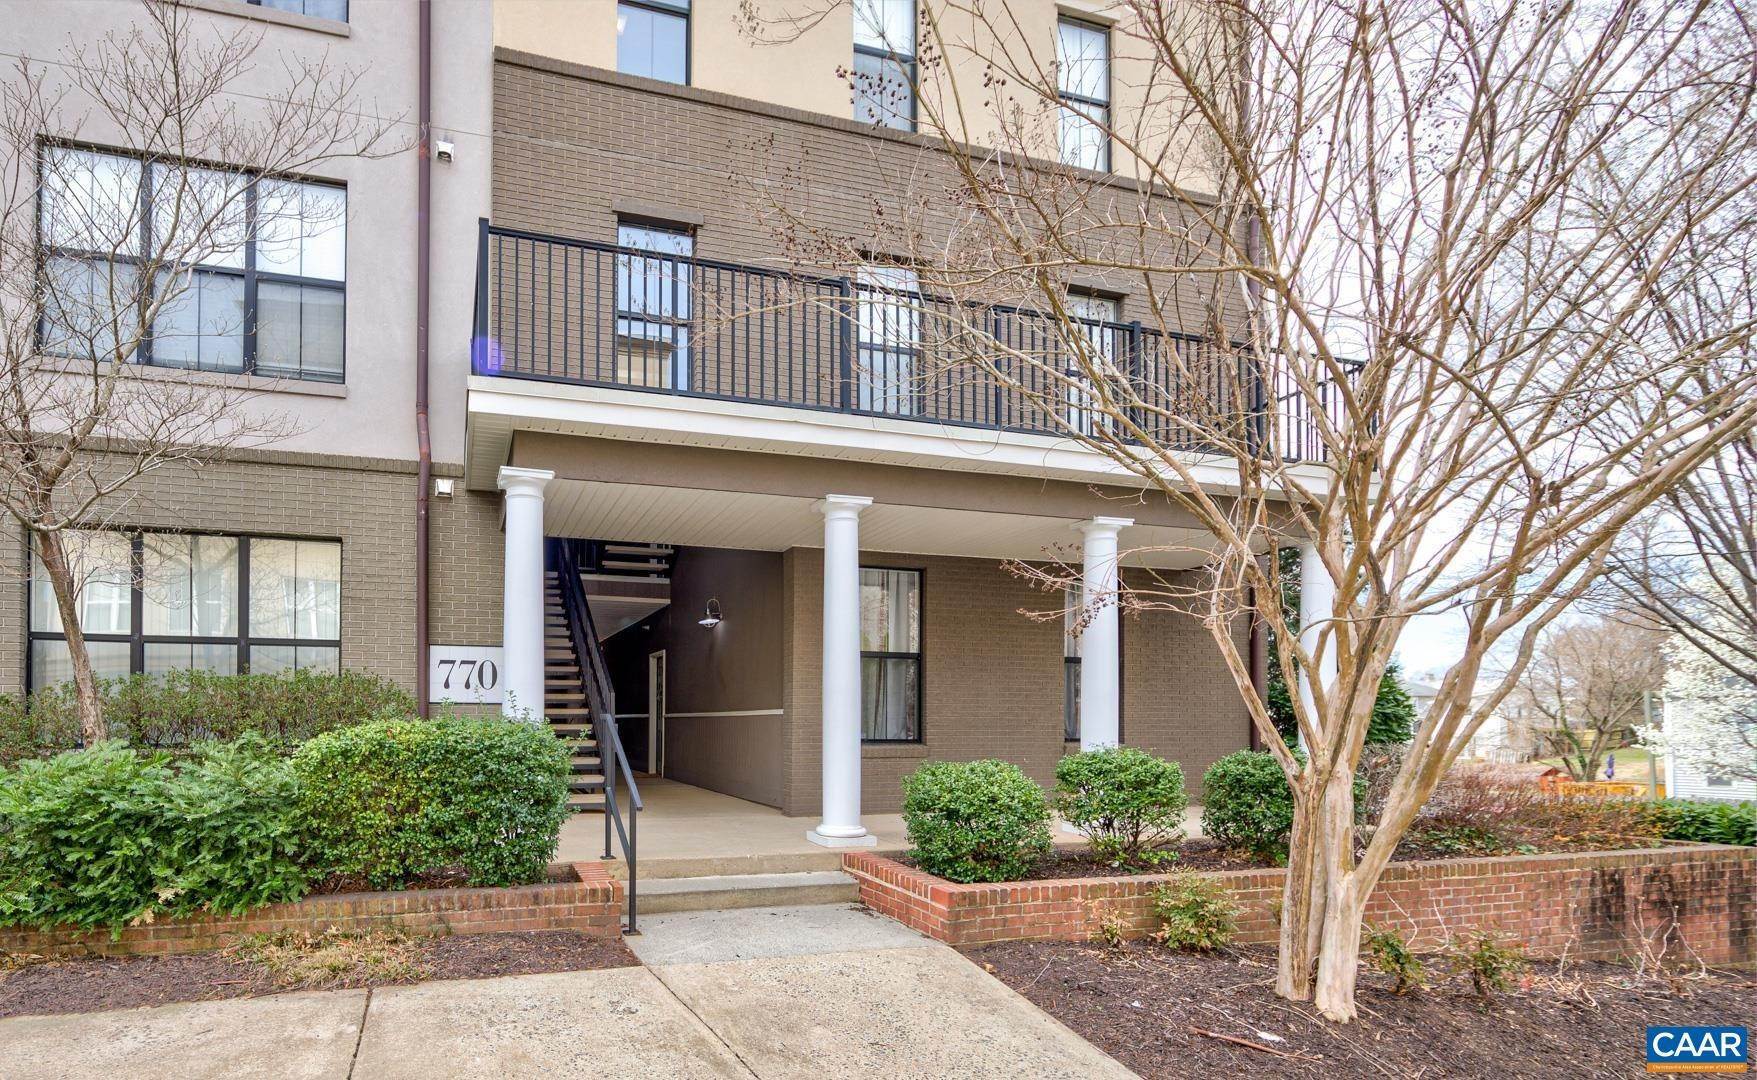 1. Condominiums at 770 WALKER SQ Charlottesville, Virginia 22903 United States